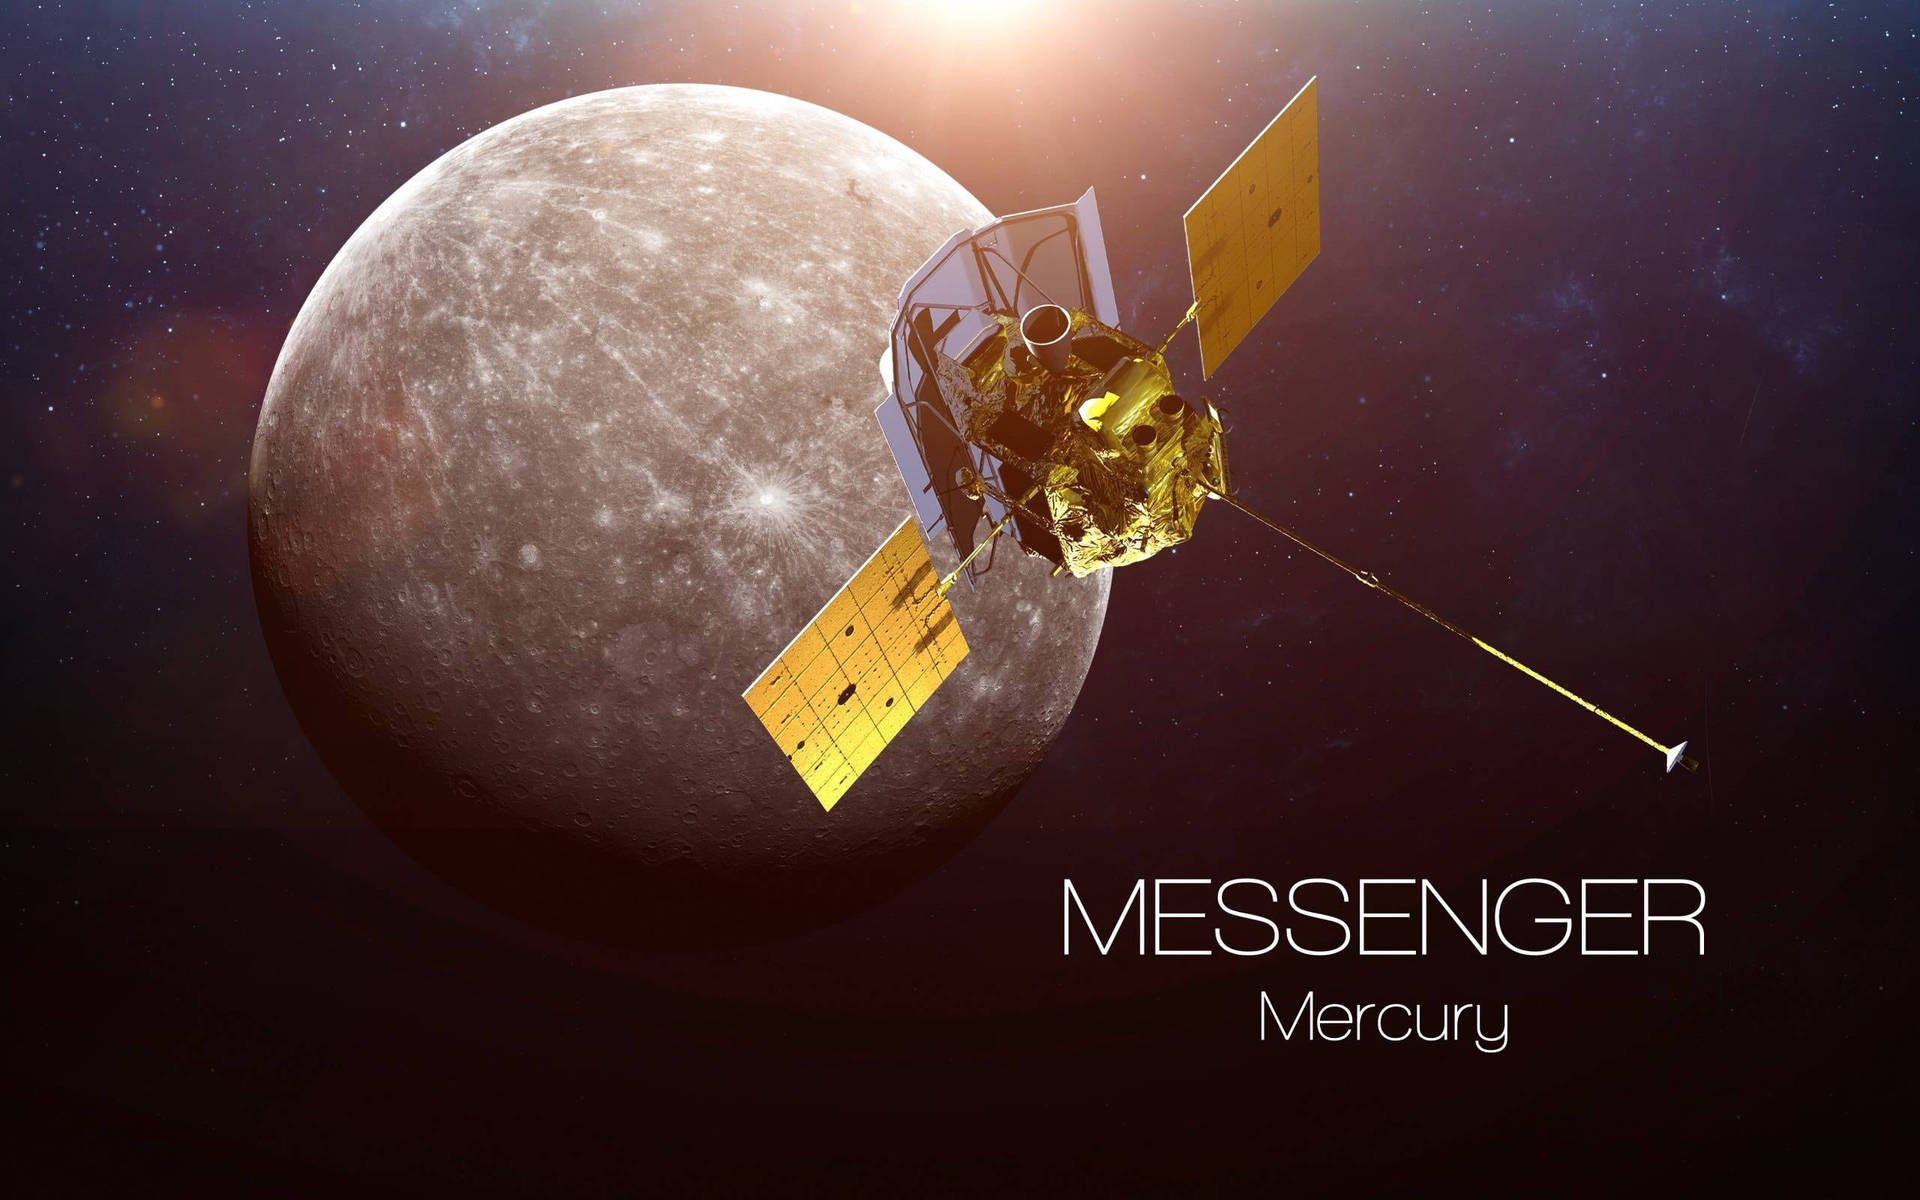 Messenger Satellite Mercury Wallpaper